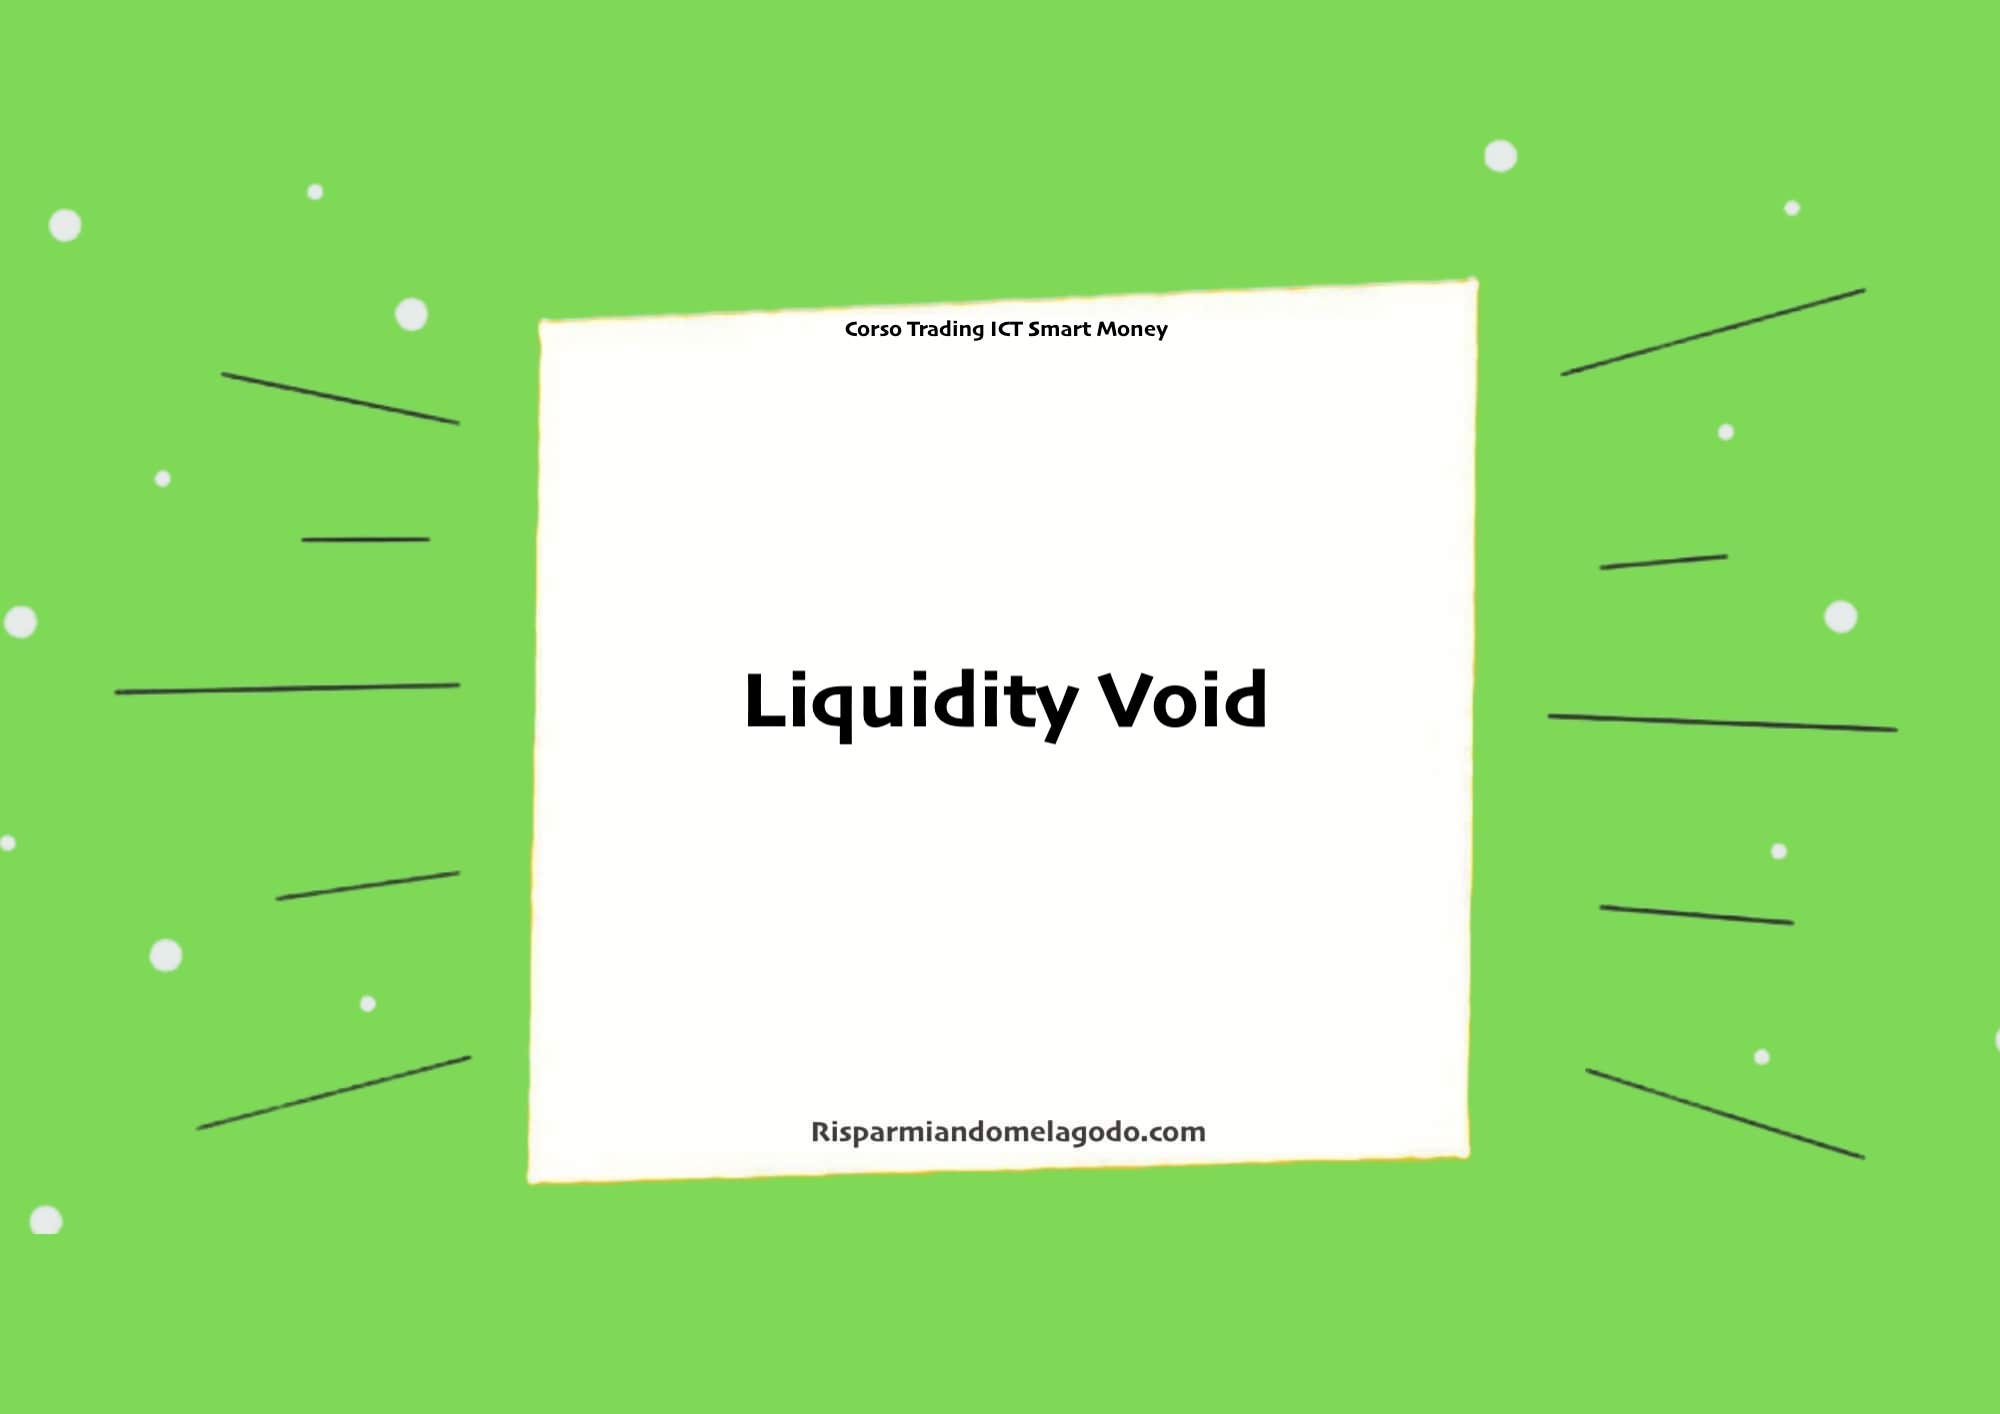 Liquidity Void